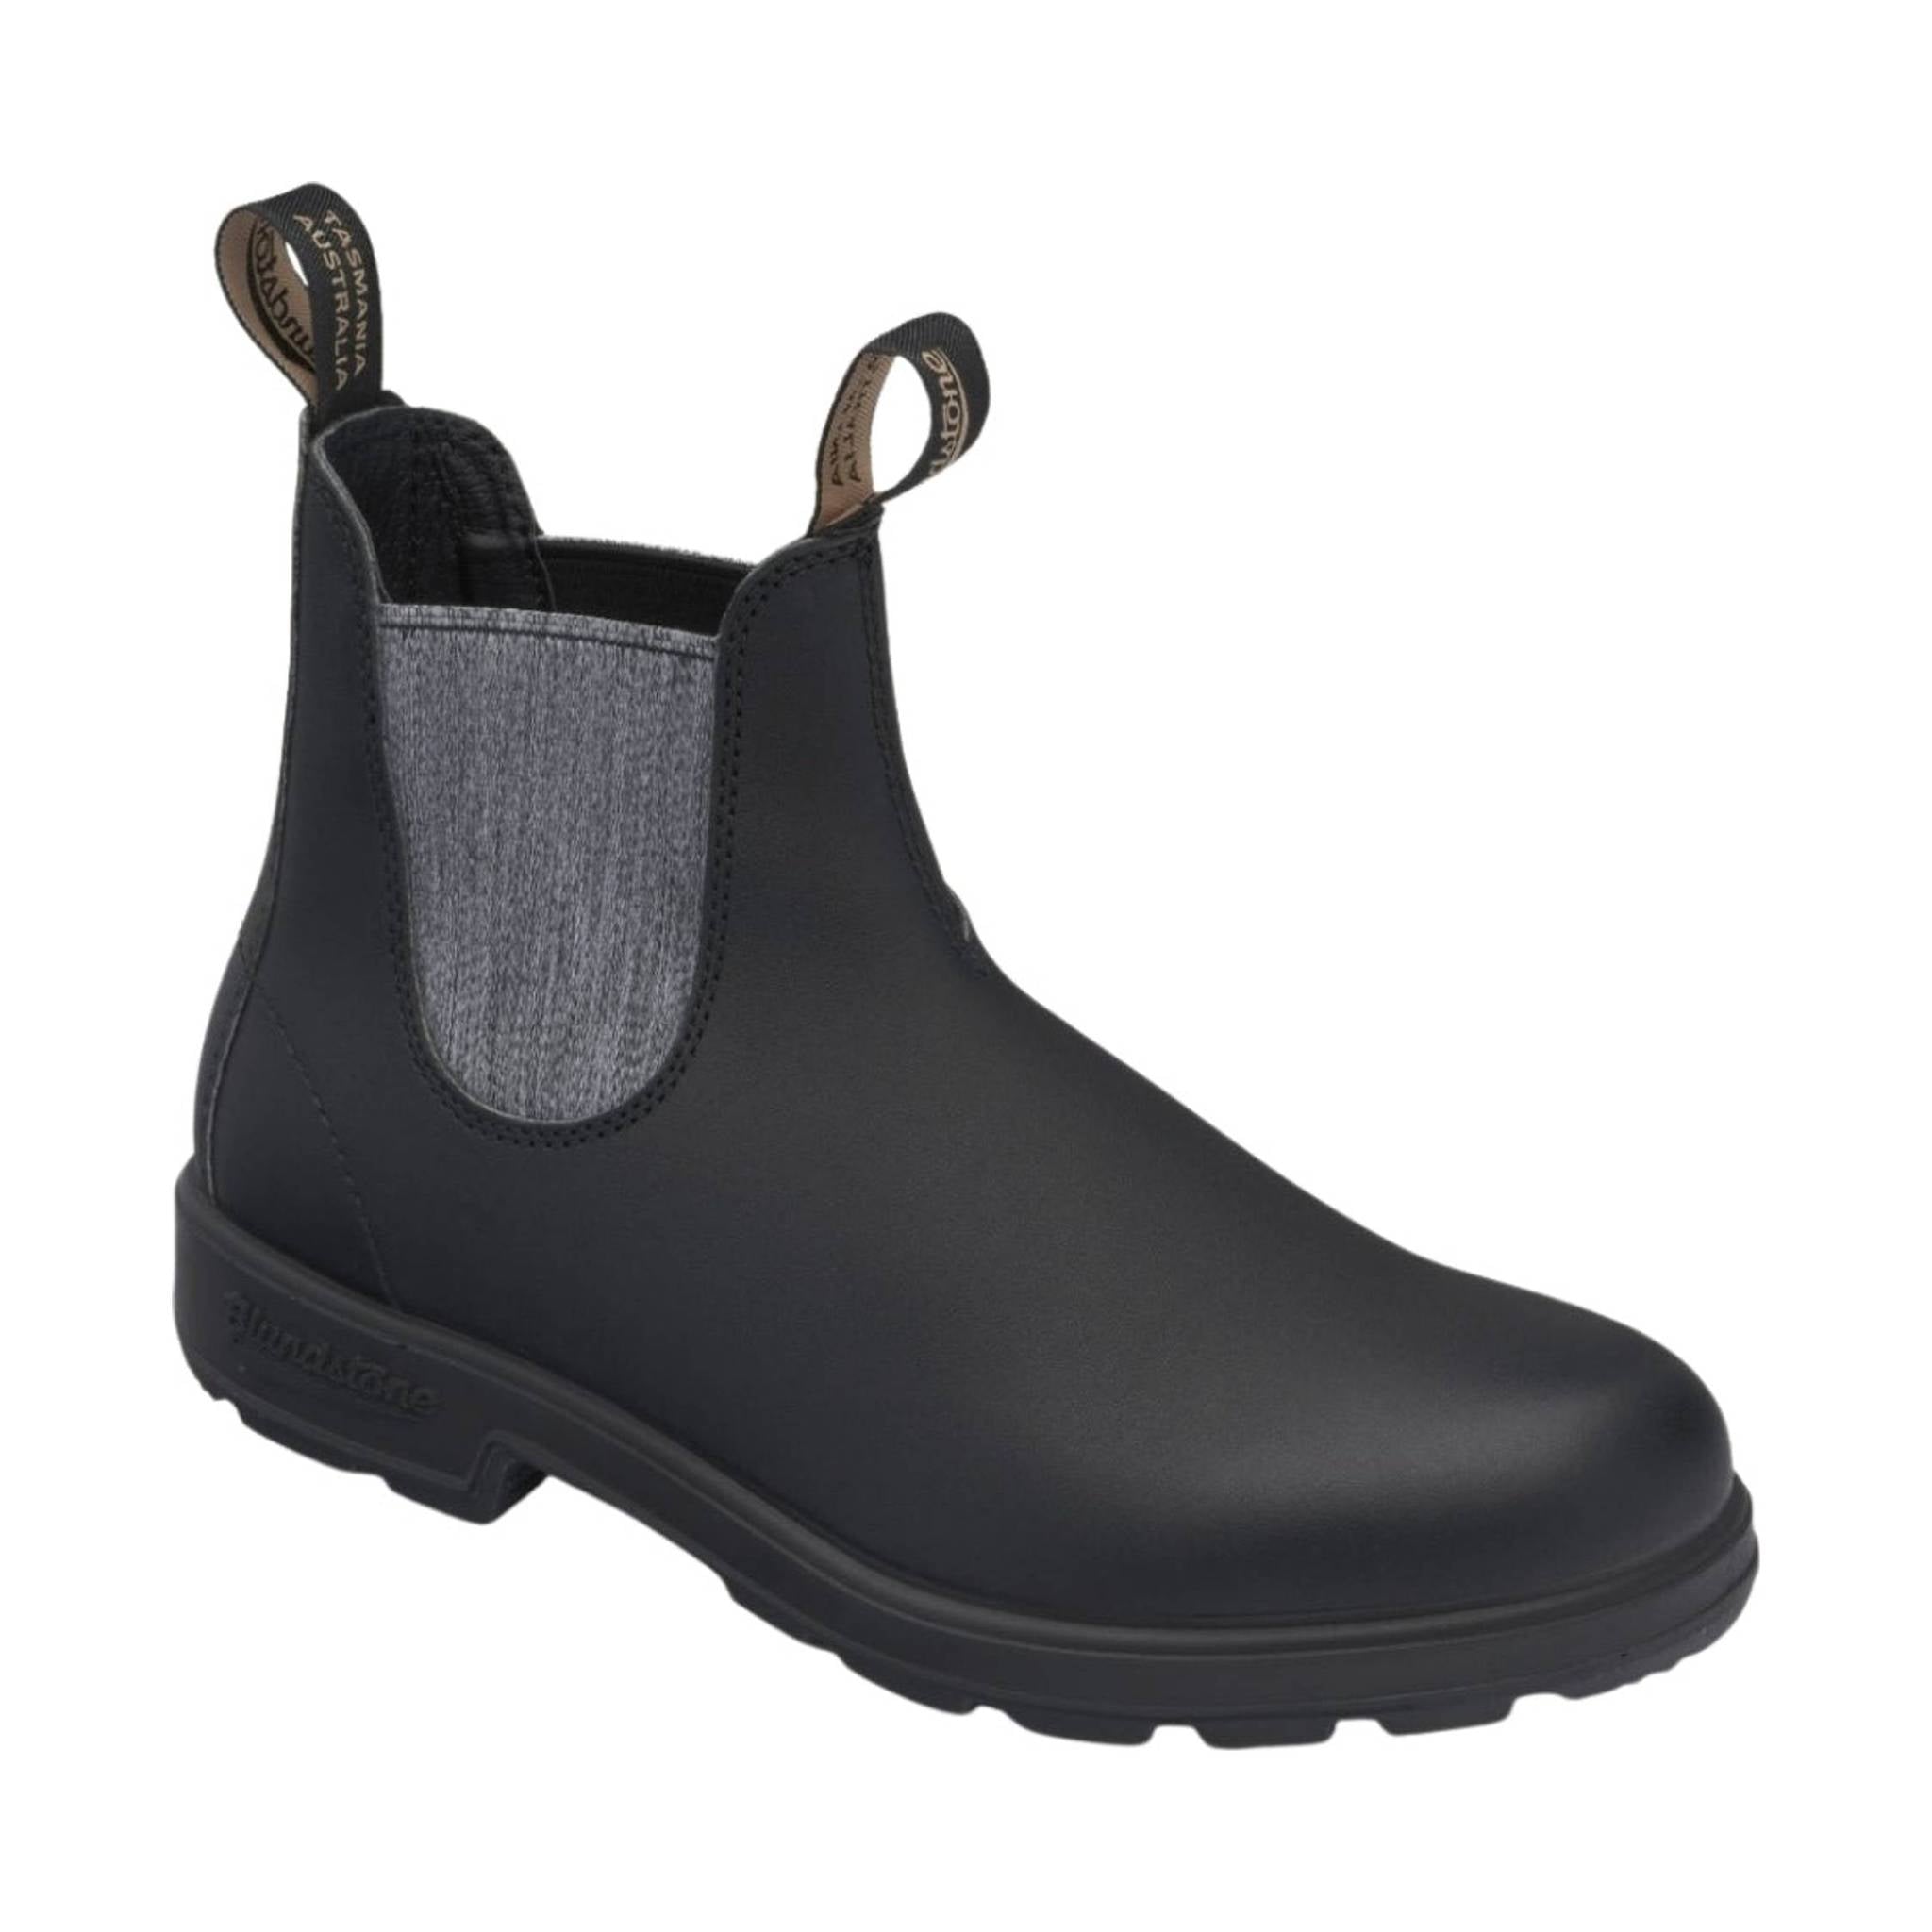 Blundstone Original 500 Chelsea Boots - Black/Grey – Lenny's Shoe